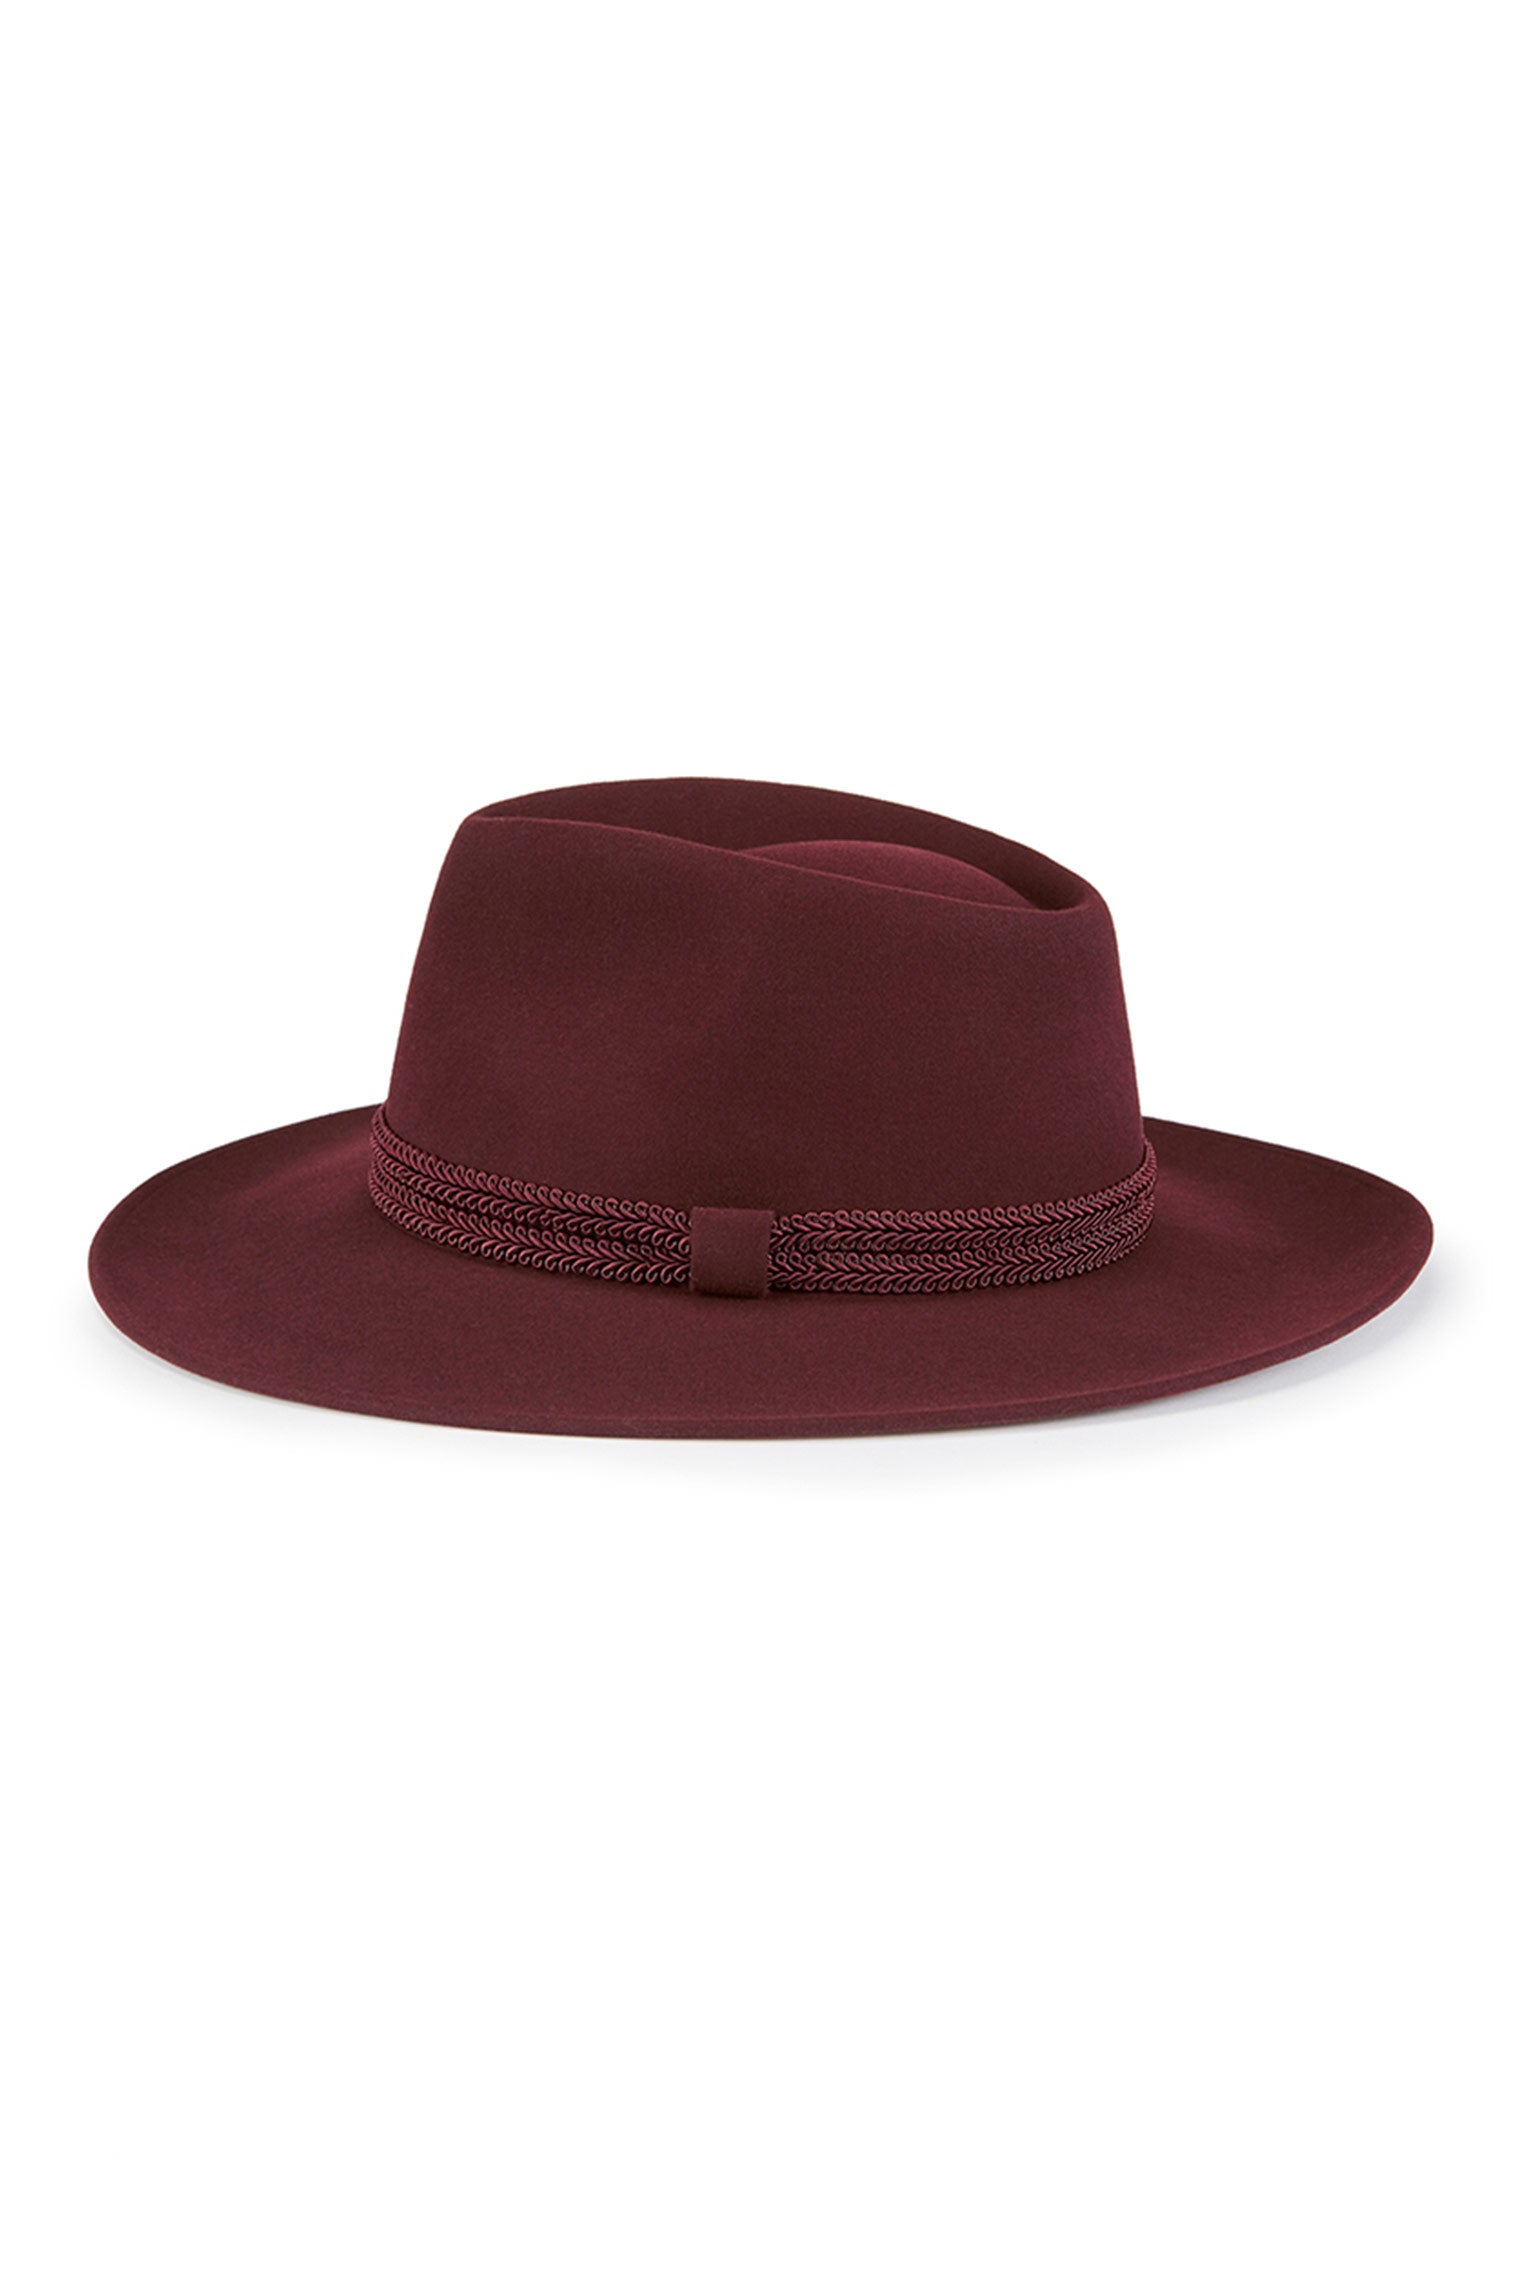 Escorial Wool Meredith Fedora - Hats for Cheltenham Races - Lock & Co. Hatters London UK